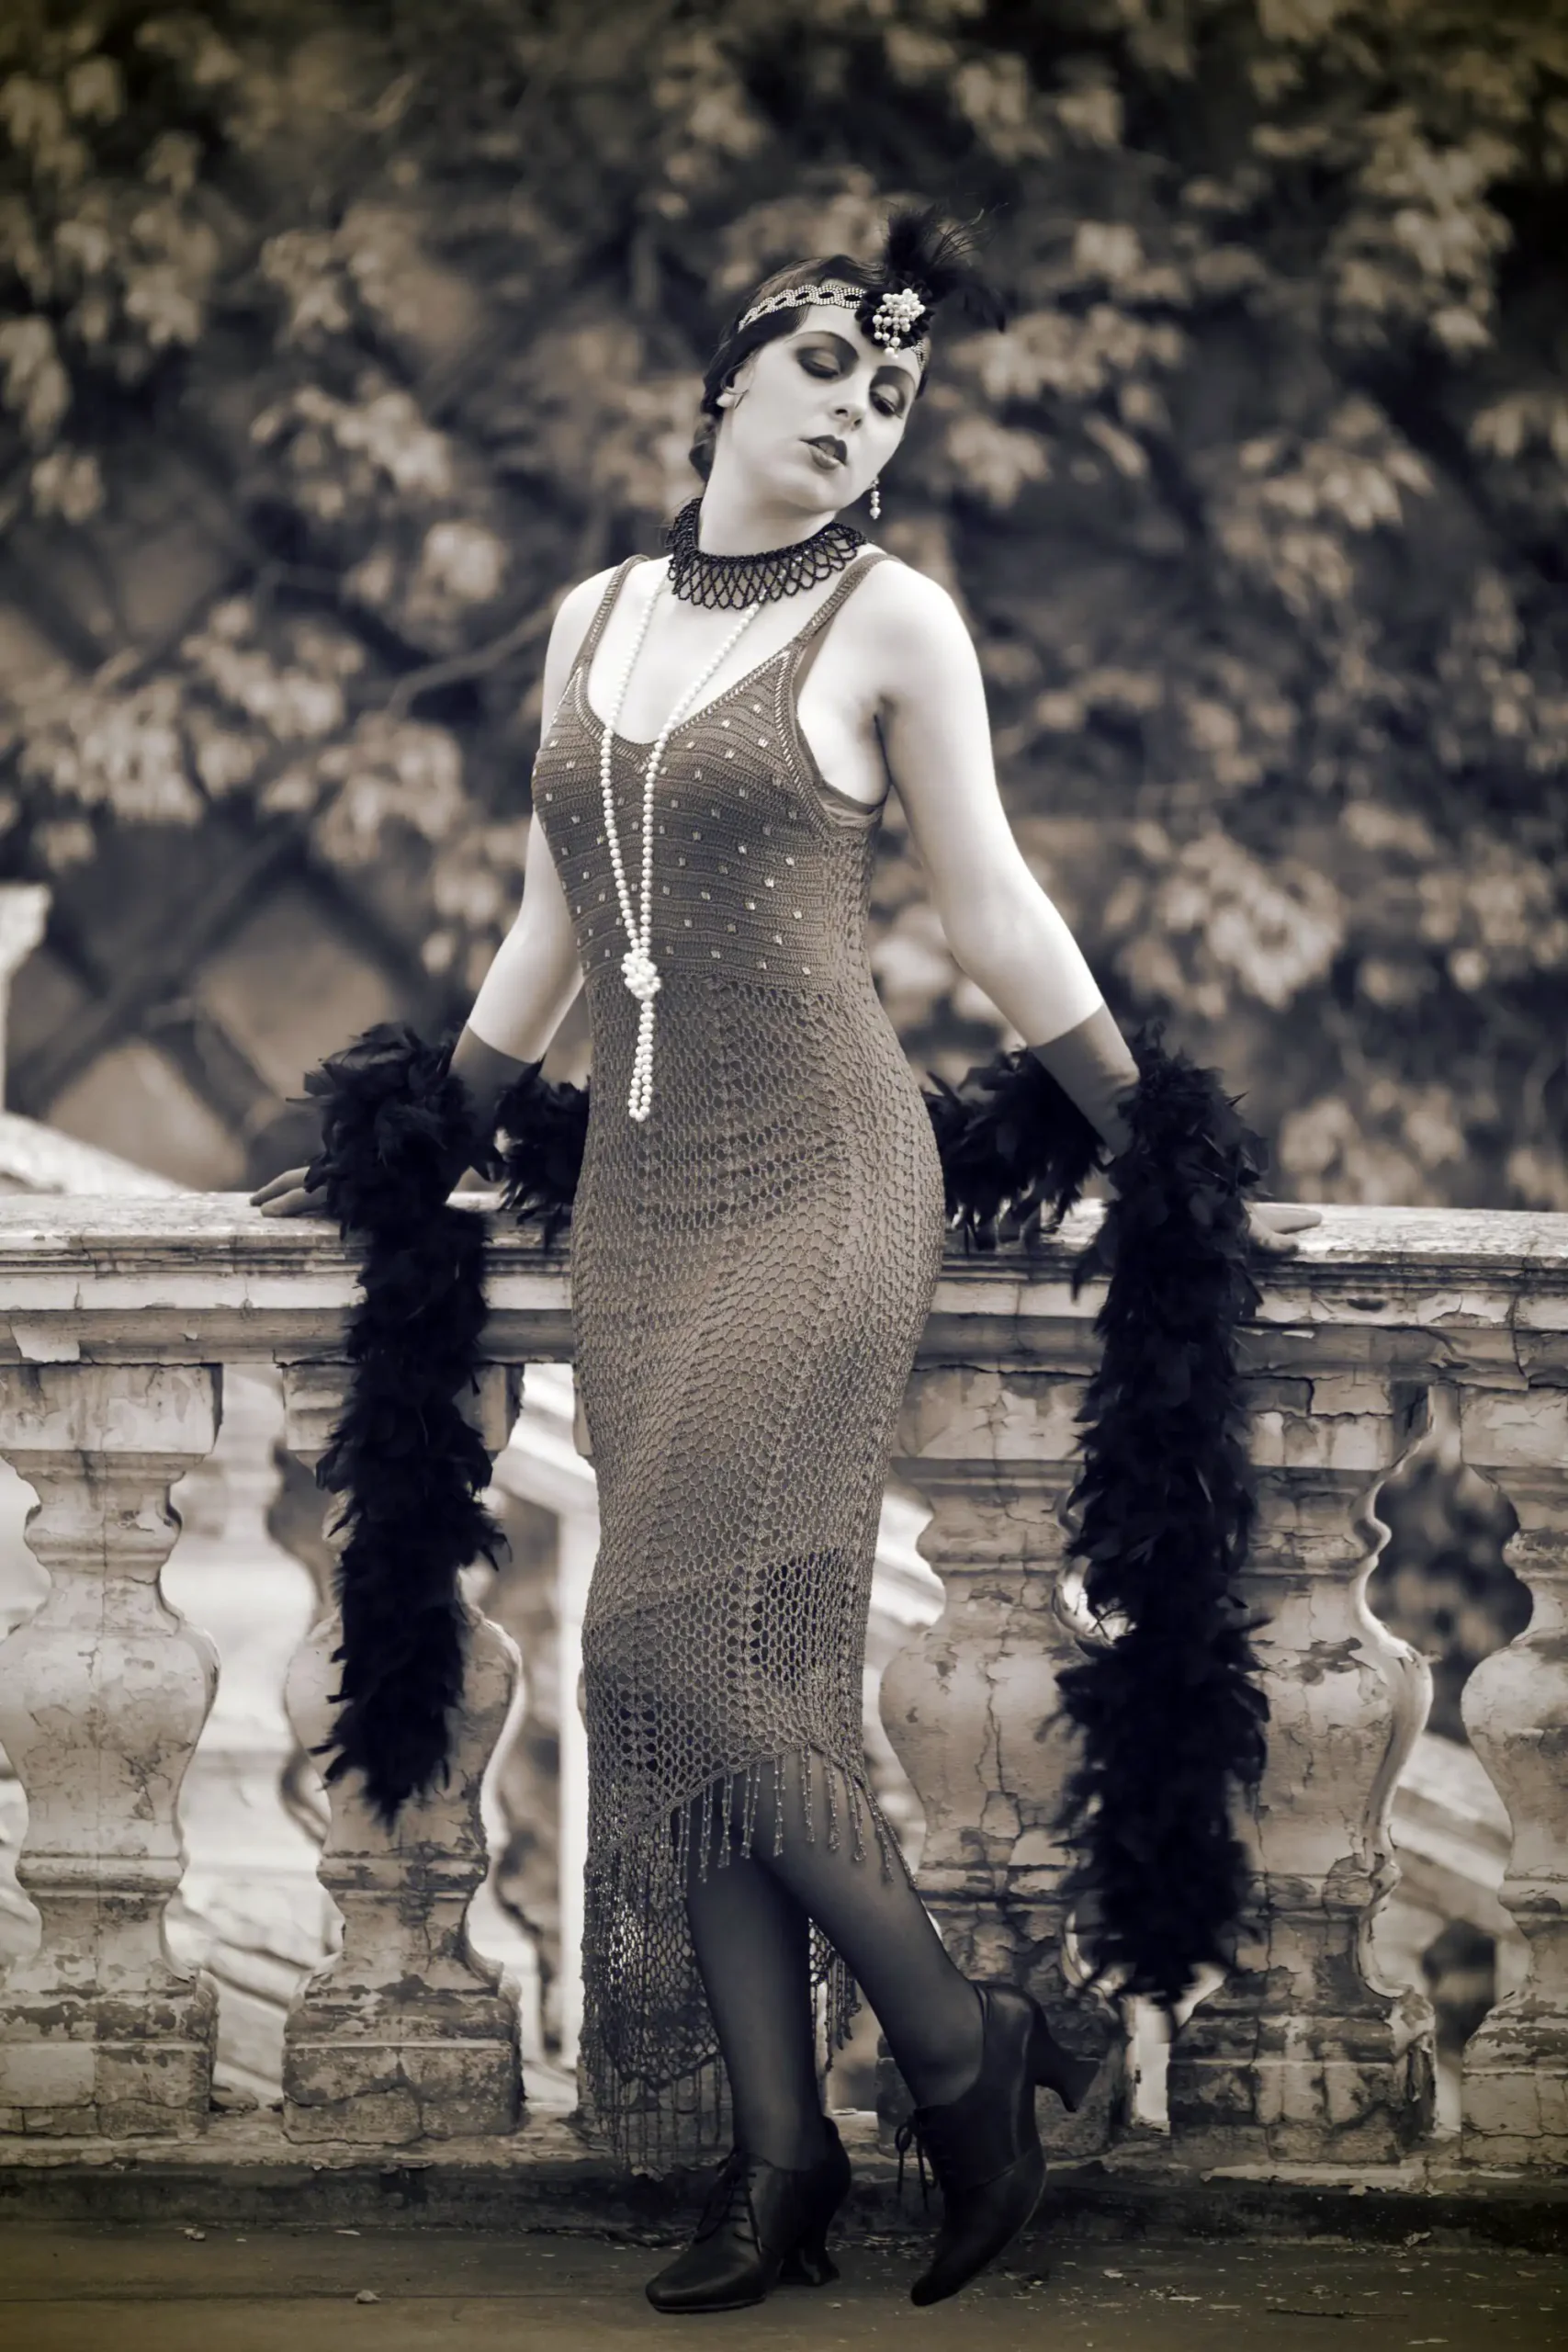 Retro Woman 1920s - 1930s